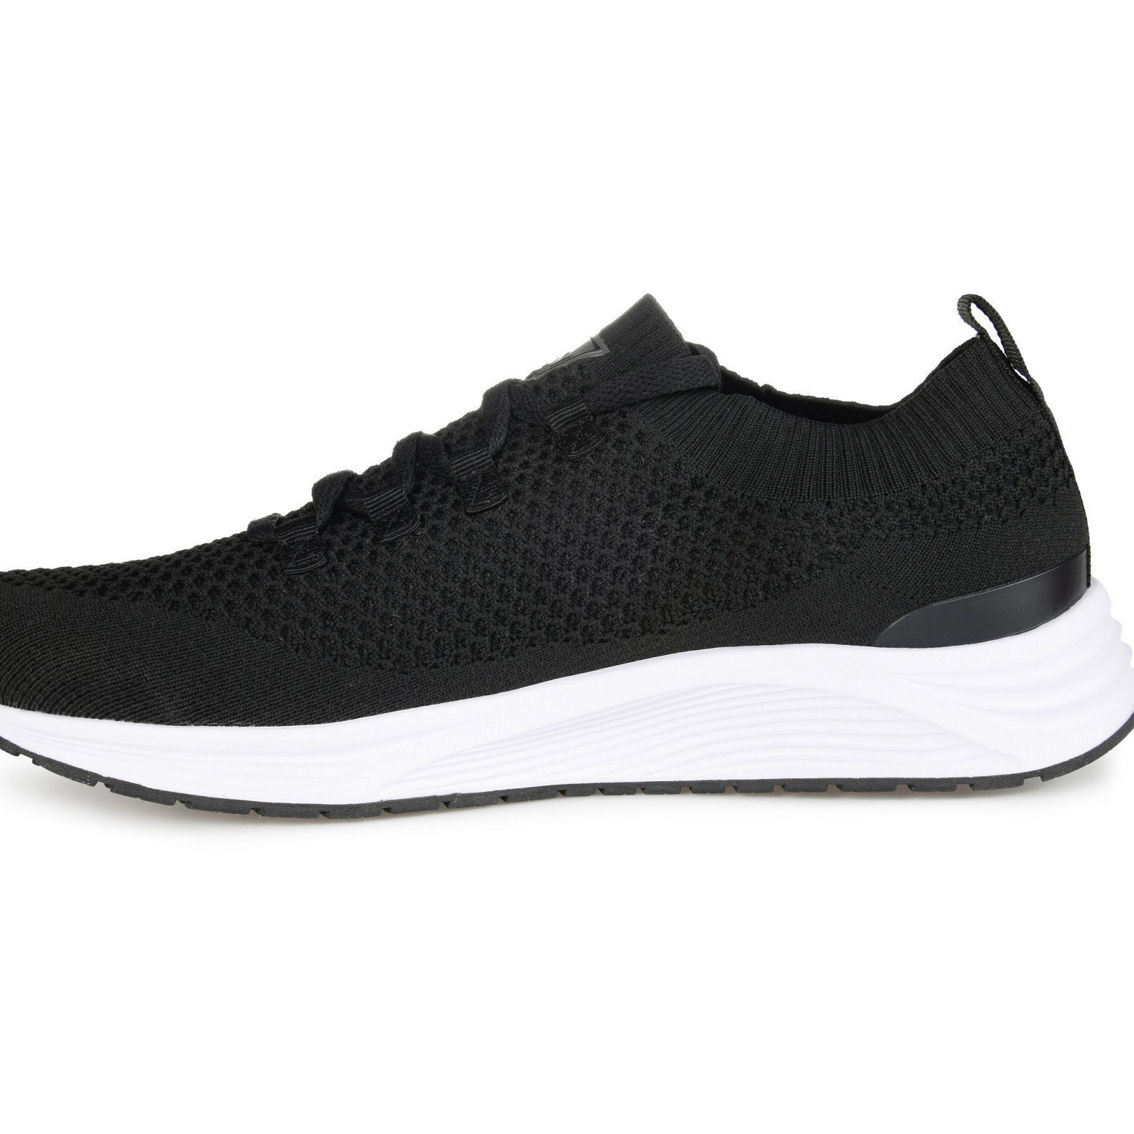 Vance Co. Rowe Casual Knit Walking Sneaker | Sneakers | Shoes | Shop ...